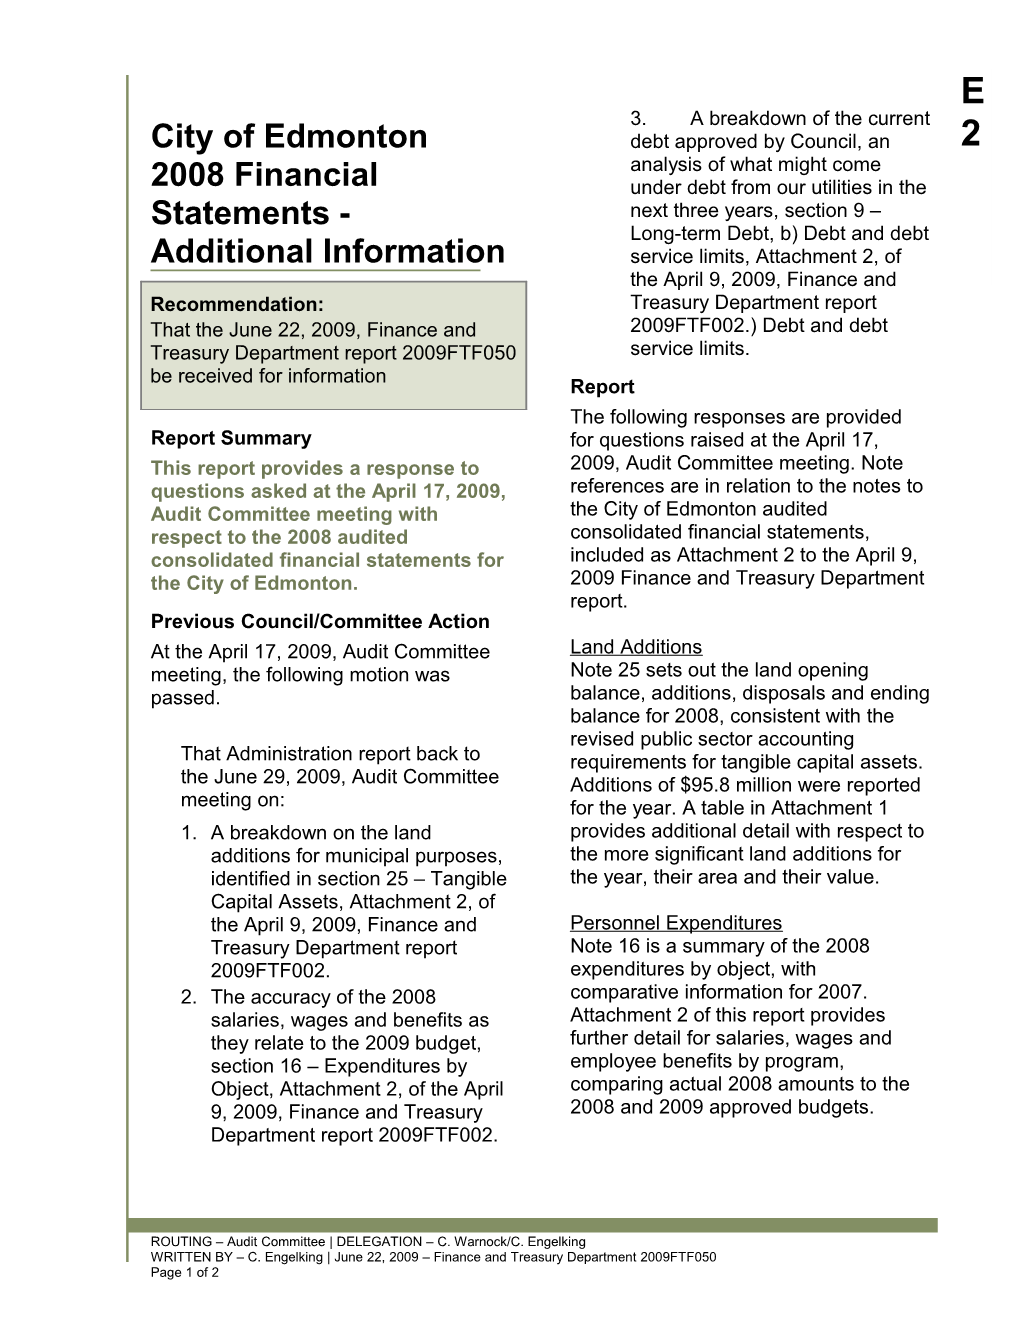 Report for Audit Committee June 29, 2009 Meeting